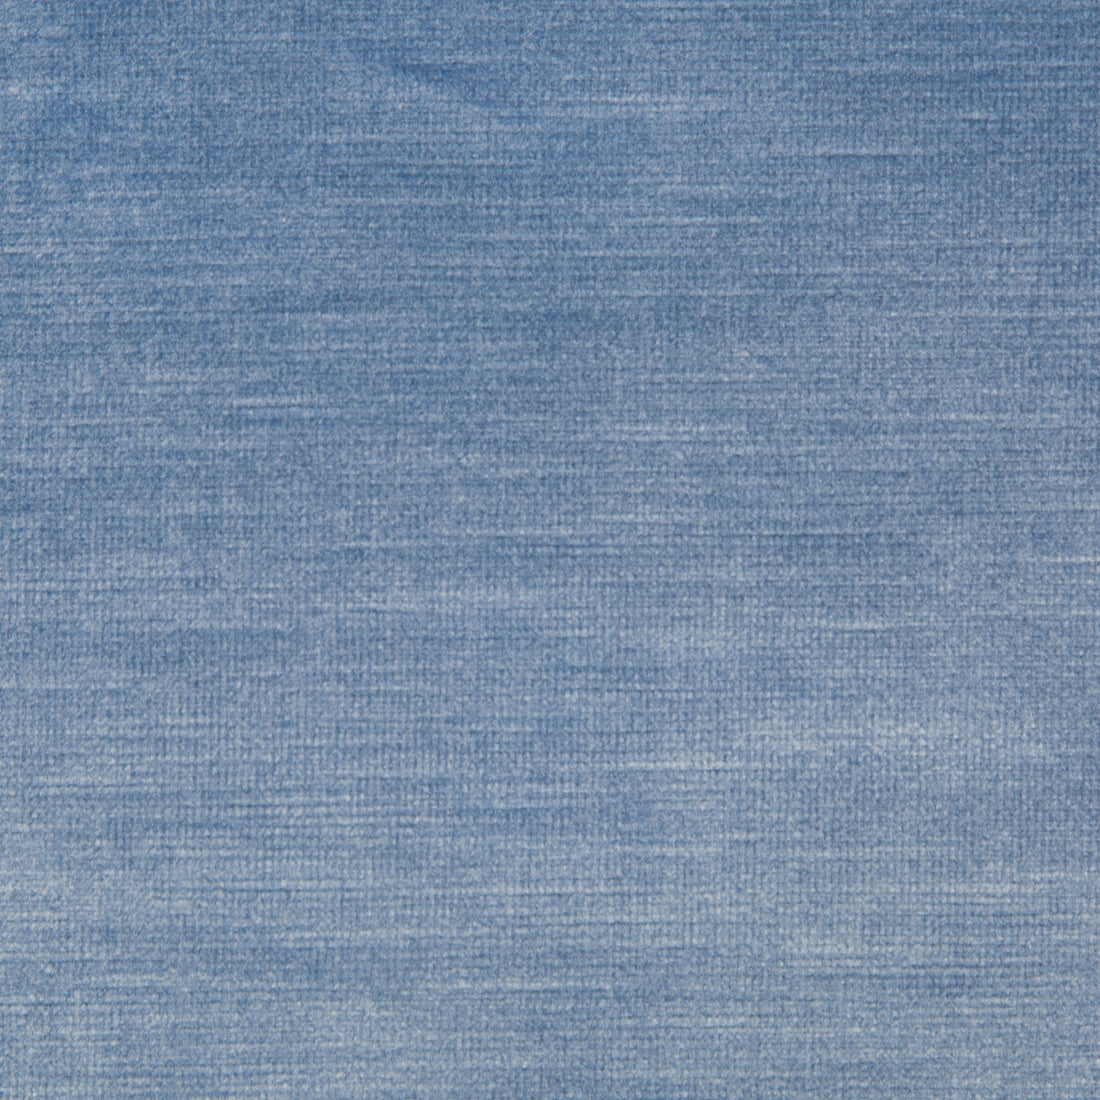 Venetian fabric in capri color - pattern 31326.5515.0 - by Kravet Design